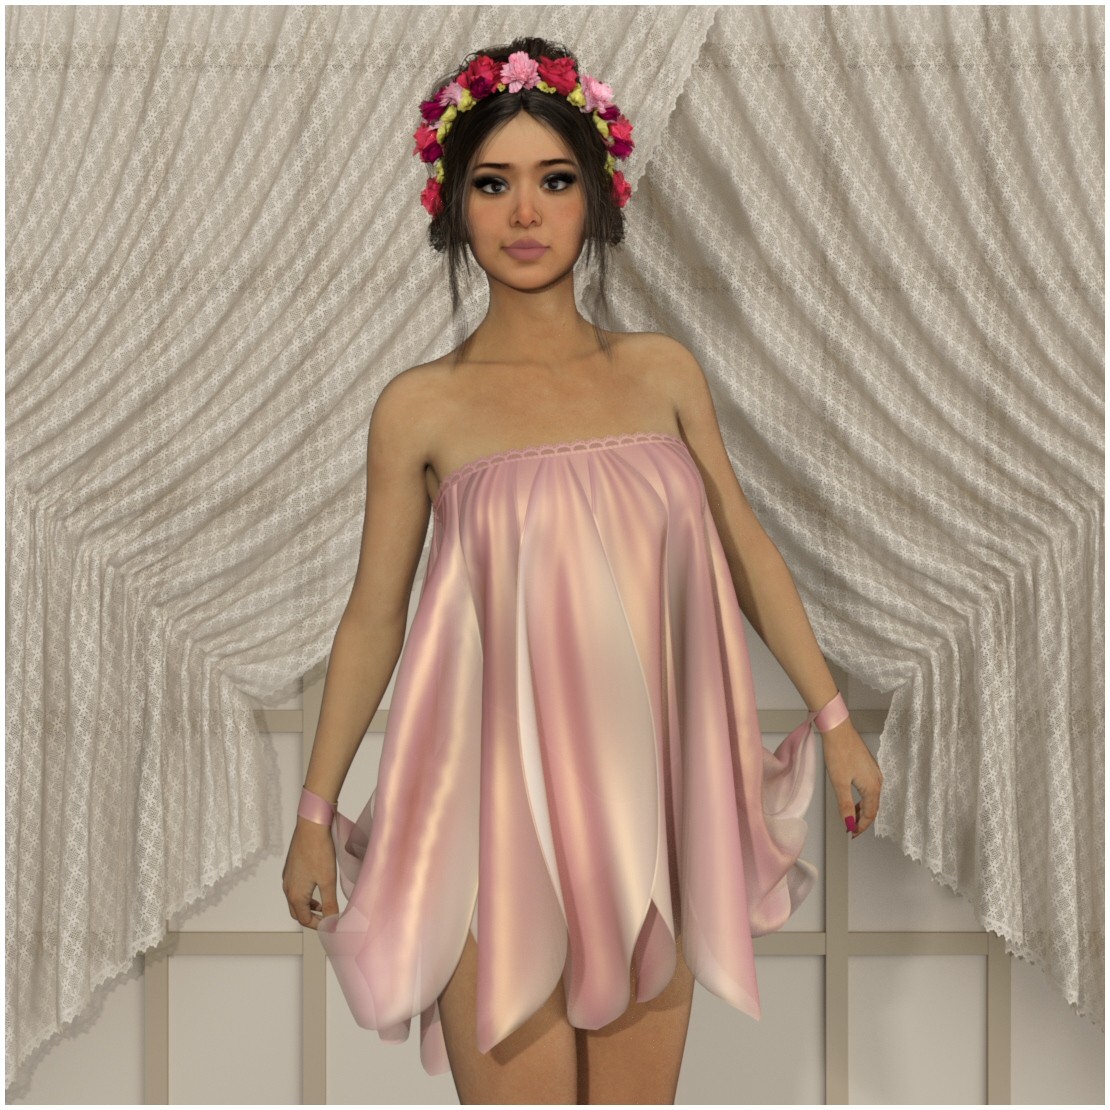 dForce - Petal Dress for G8Fs by: Lully, 3D Models by Daz 3D